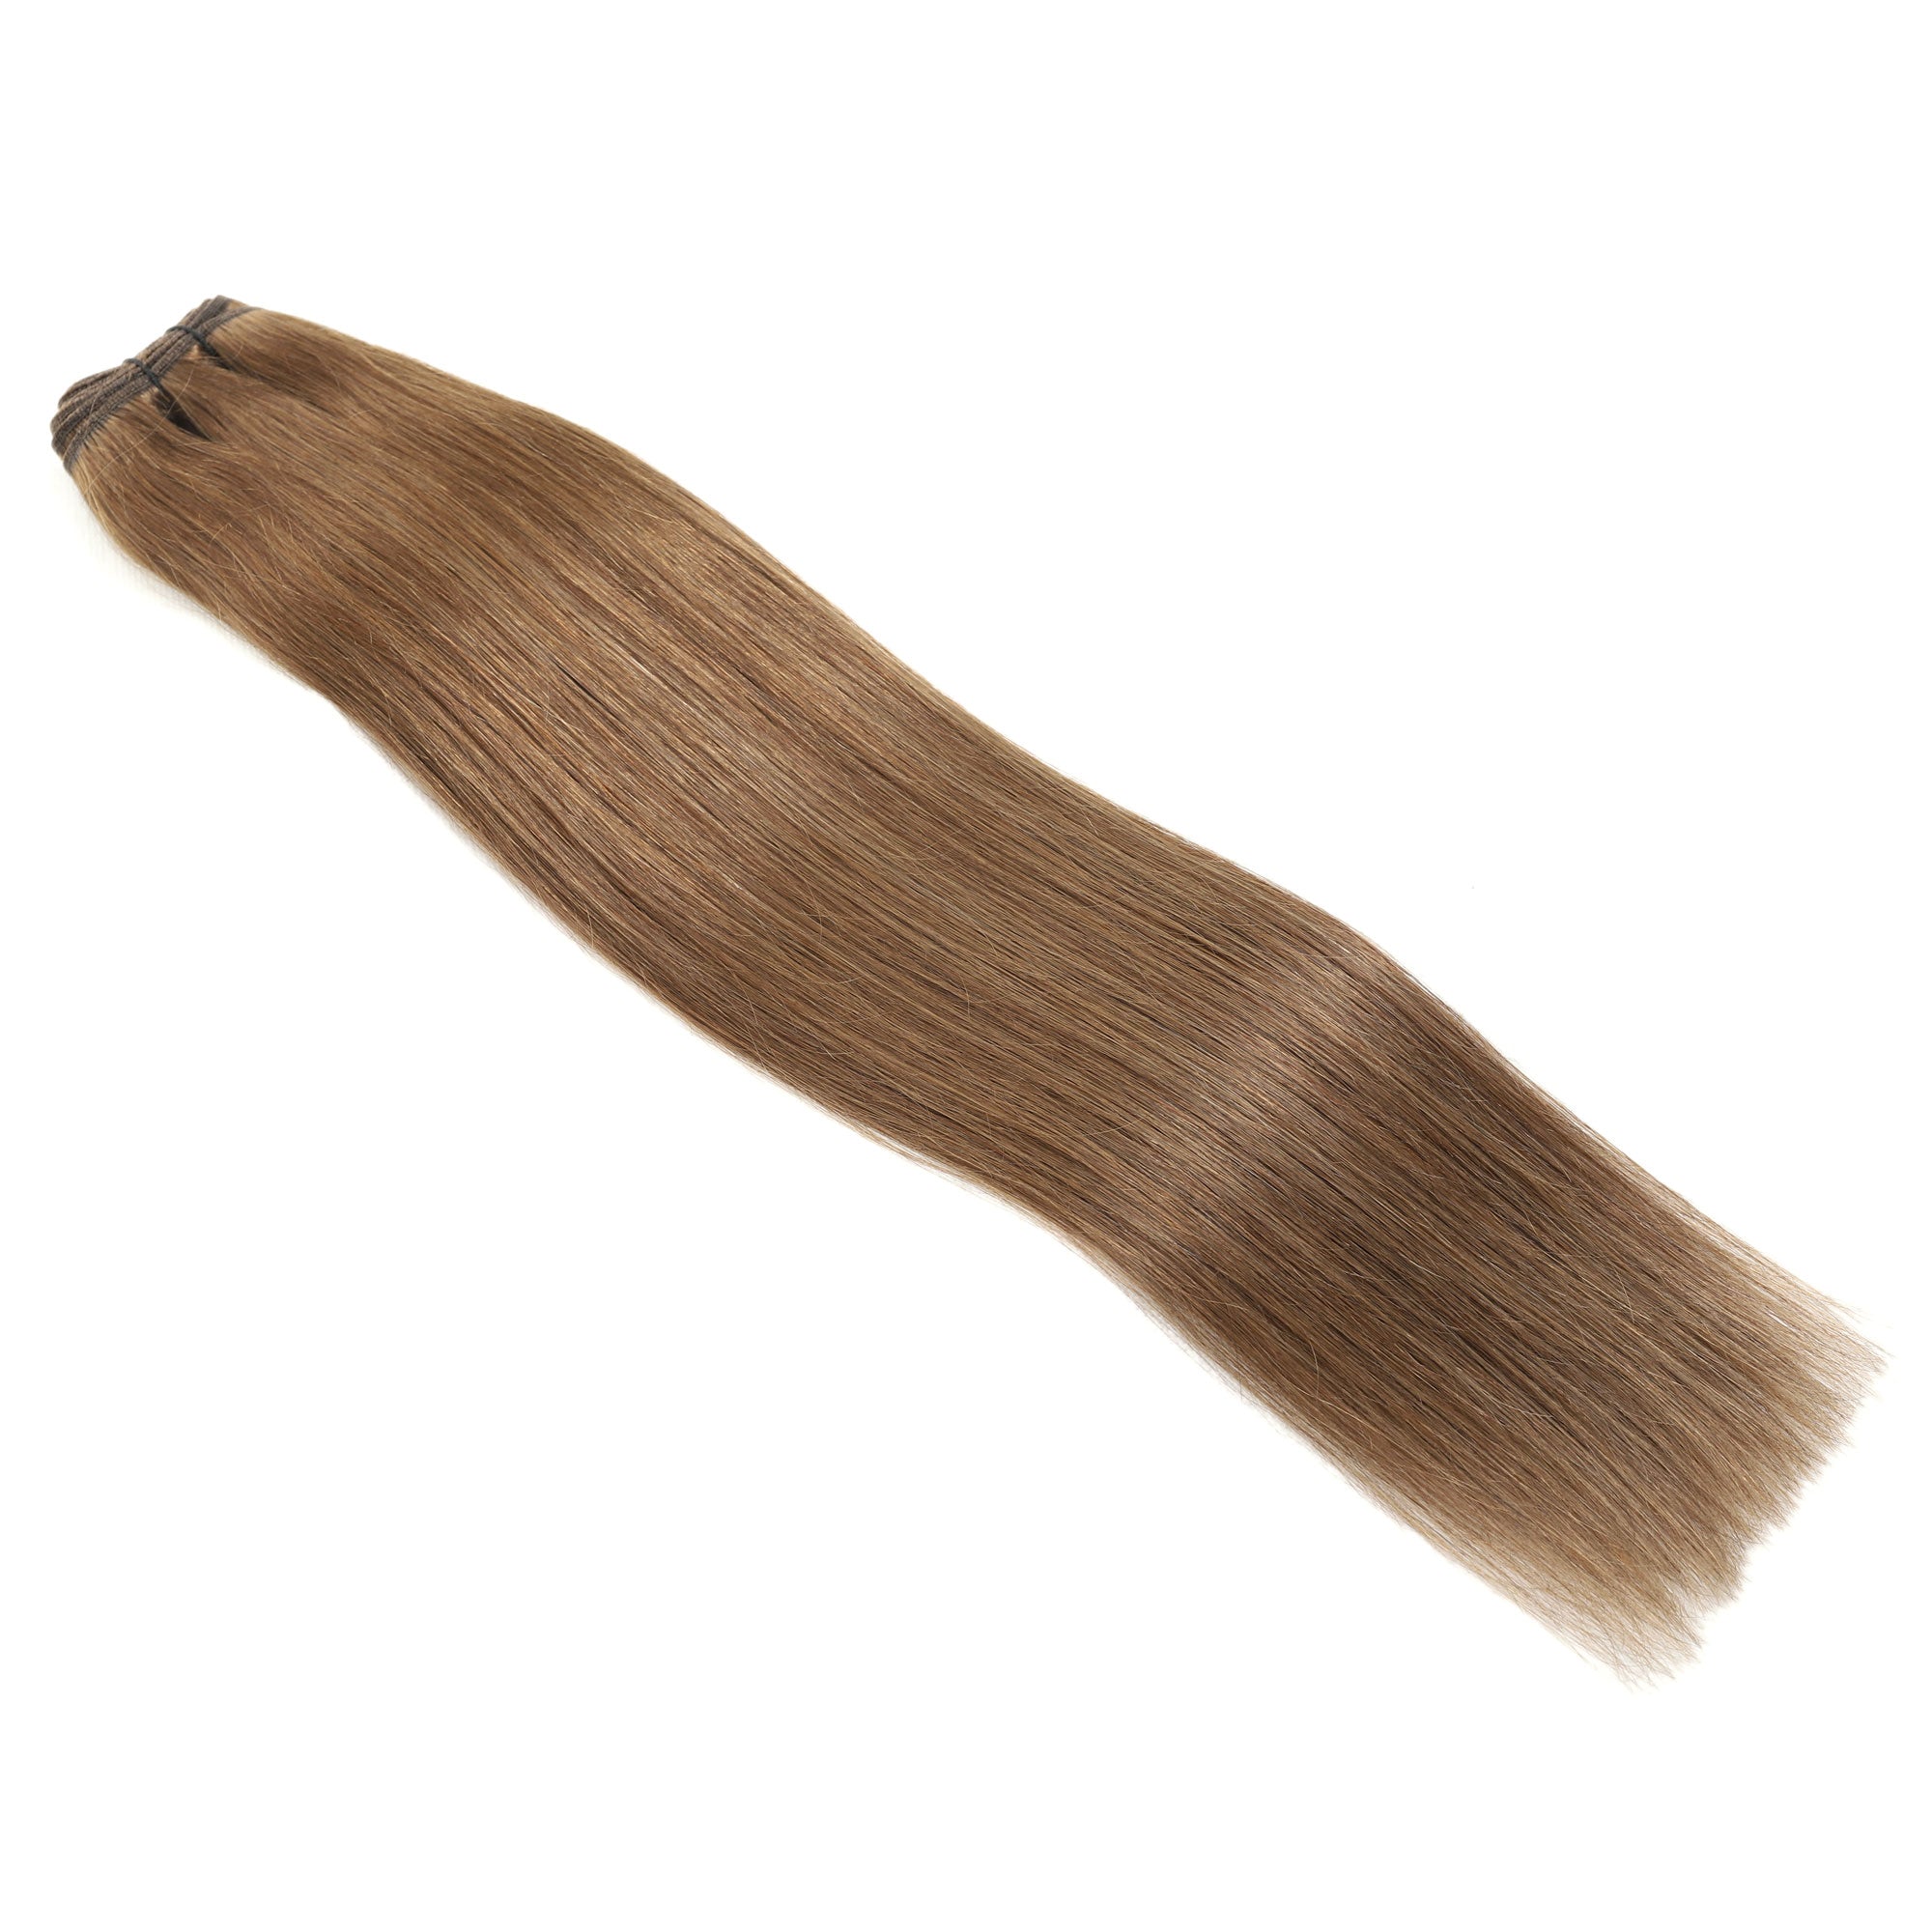 Weft Hair Extensions Remy Human Hair #6 Medium Brown 21"